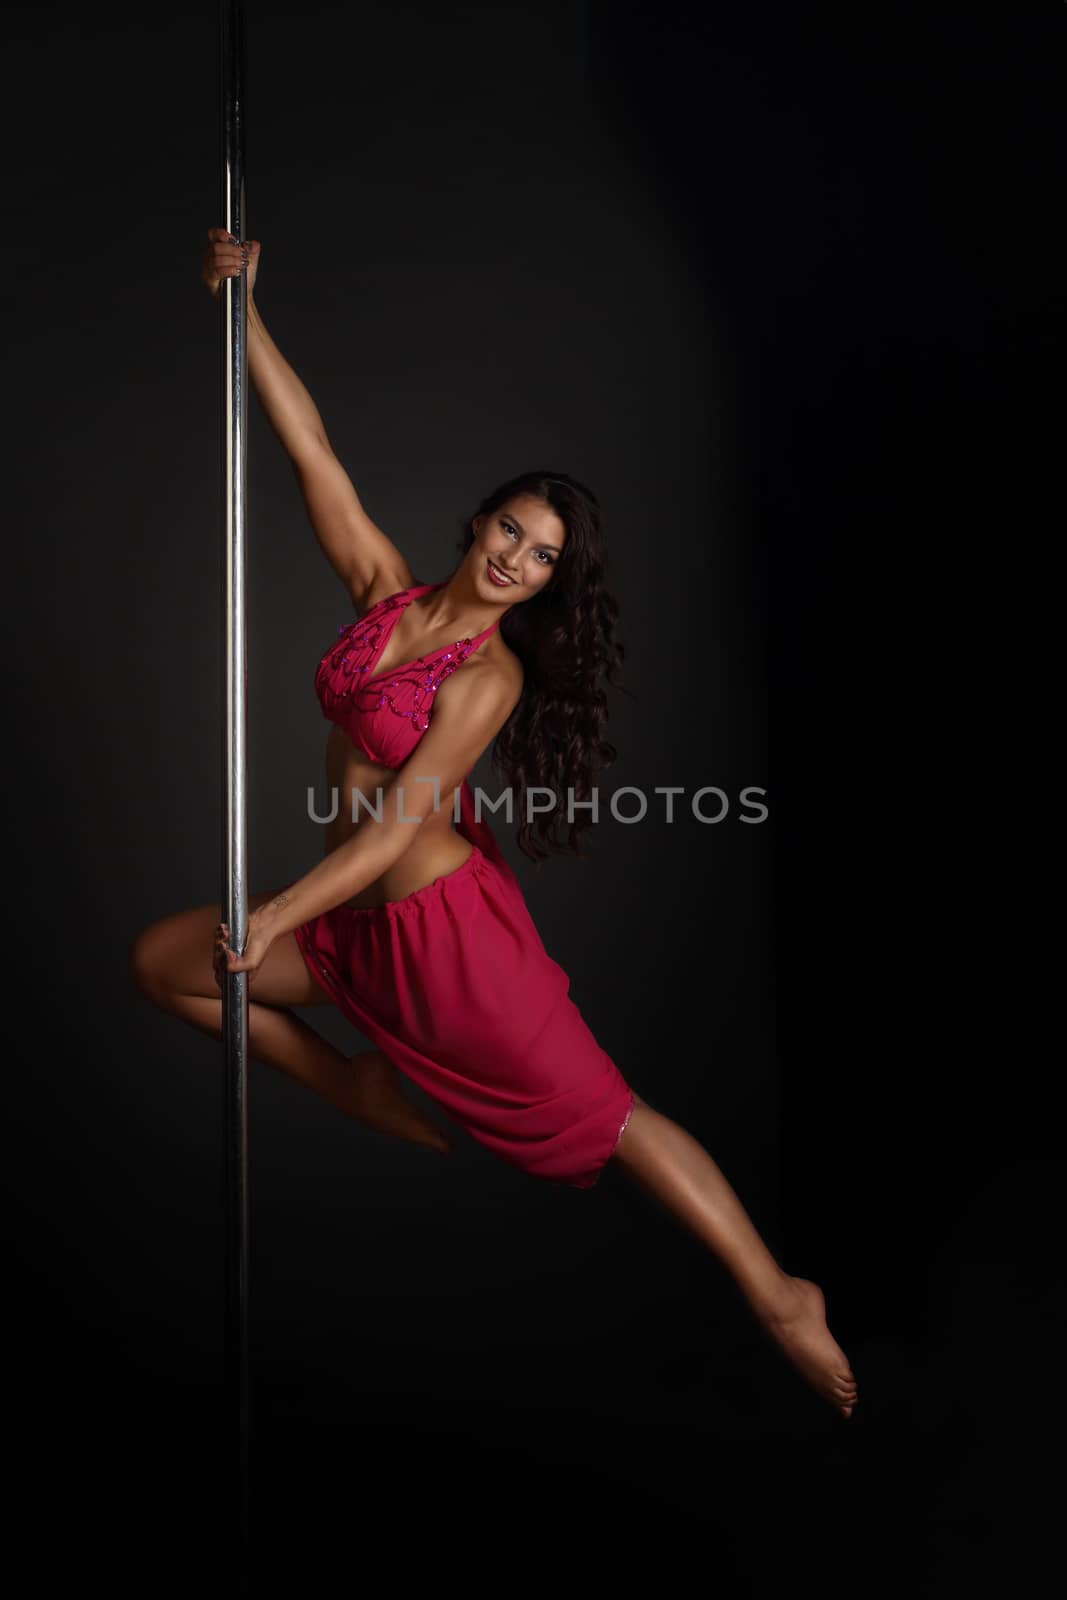 Woman performing pole dance by destillat